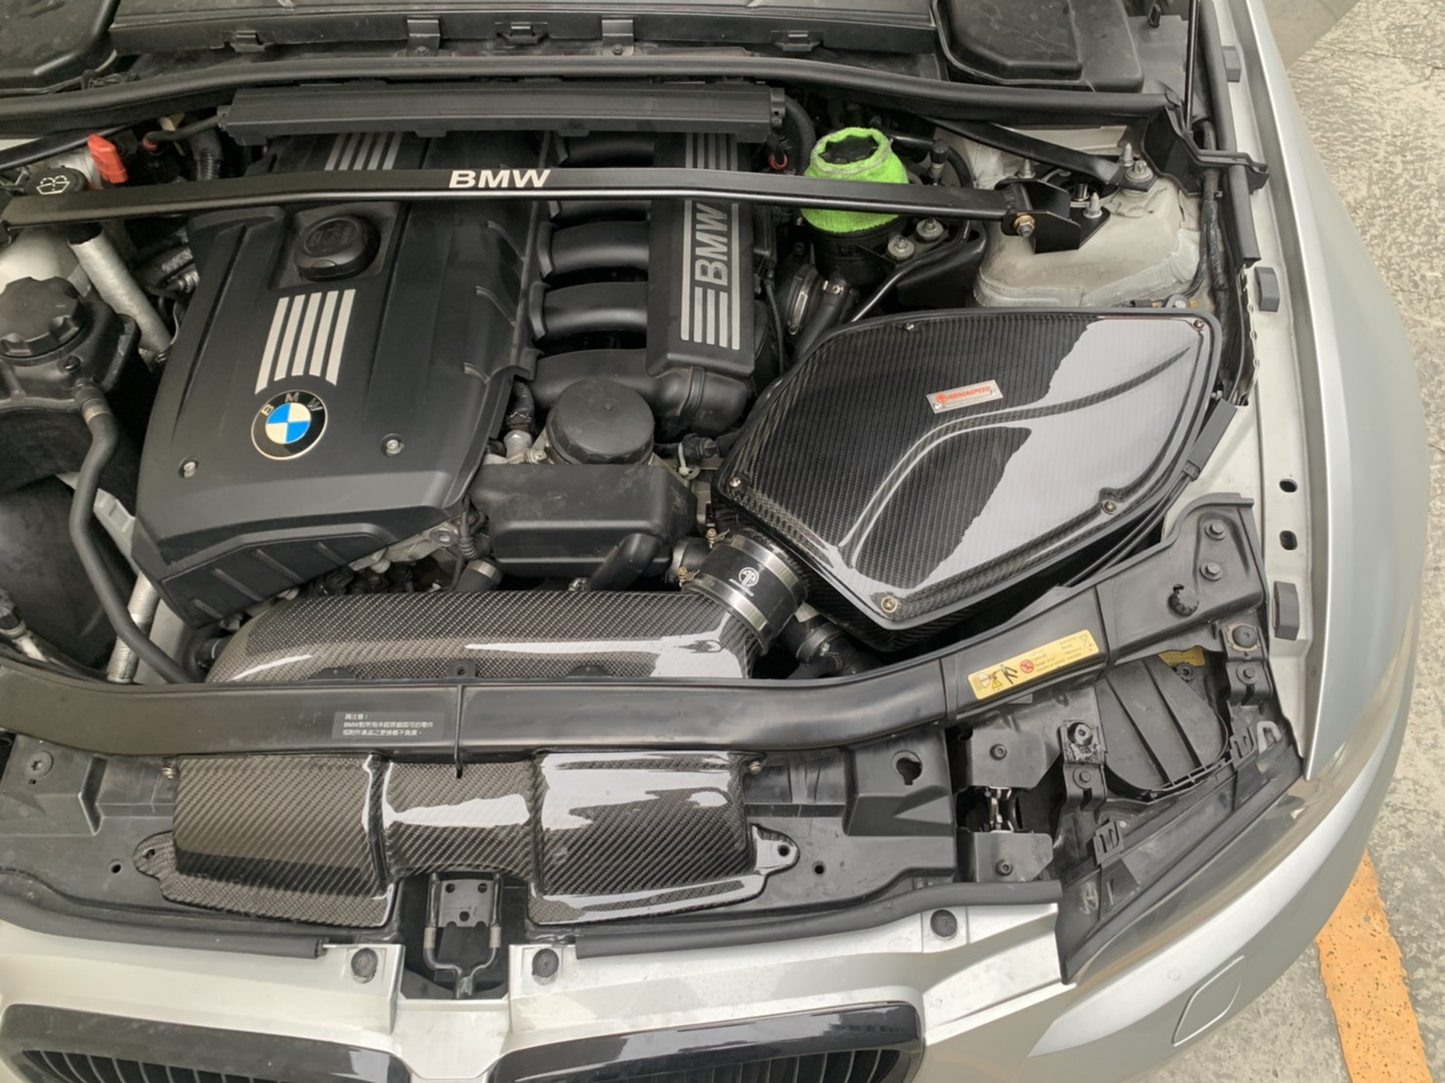 ARMASPEED Carbon Fiber Cold Air Intake Gloss BMW E9X 323i / 325i / 330i N52